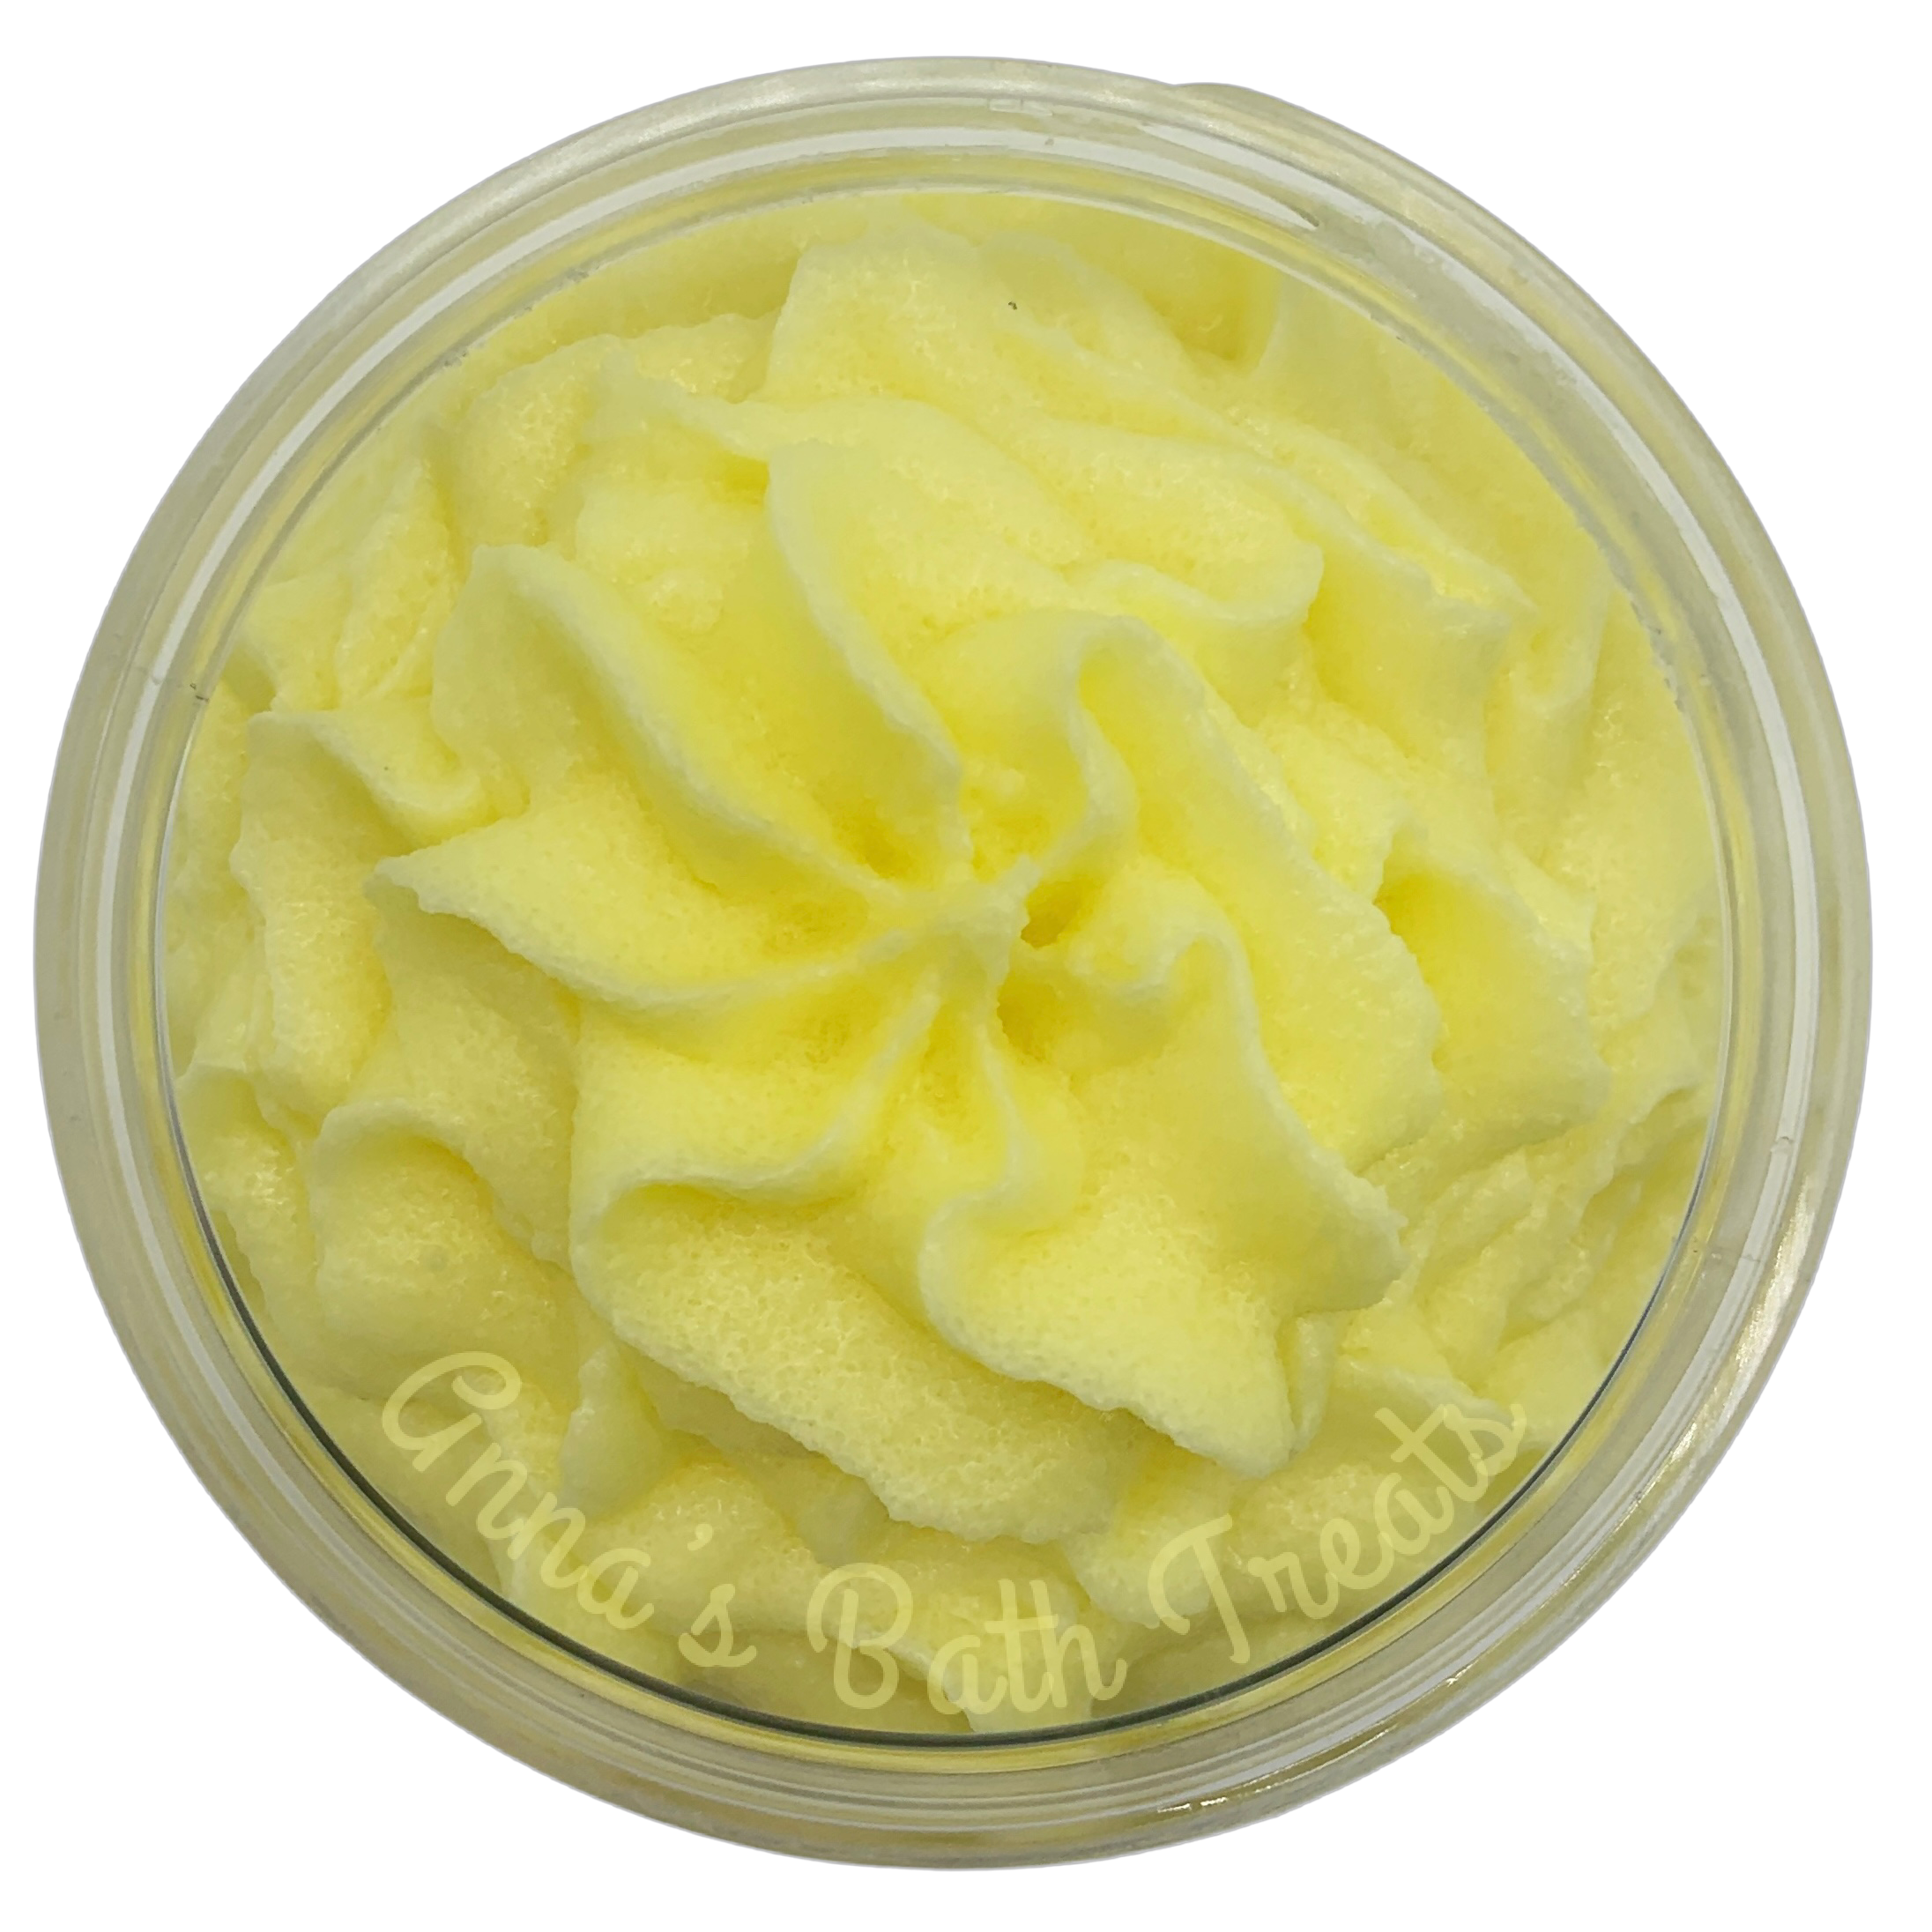 Lemon Heaven Body Butter